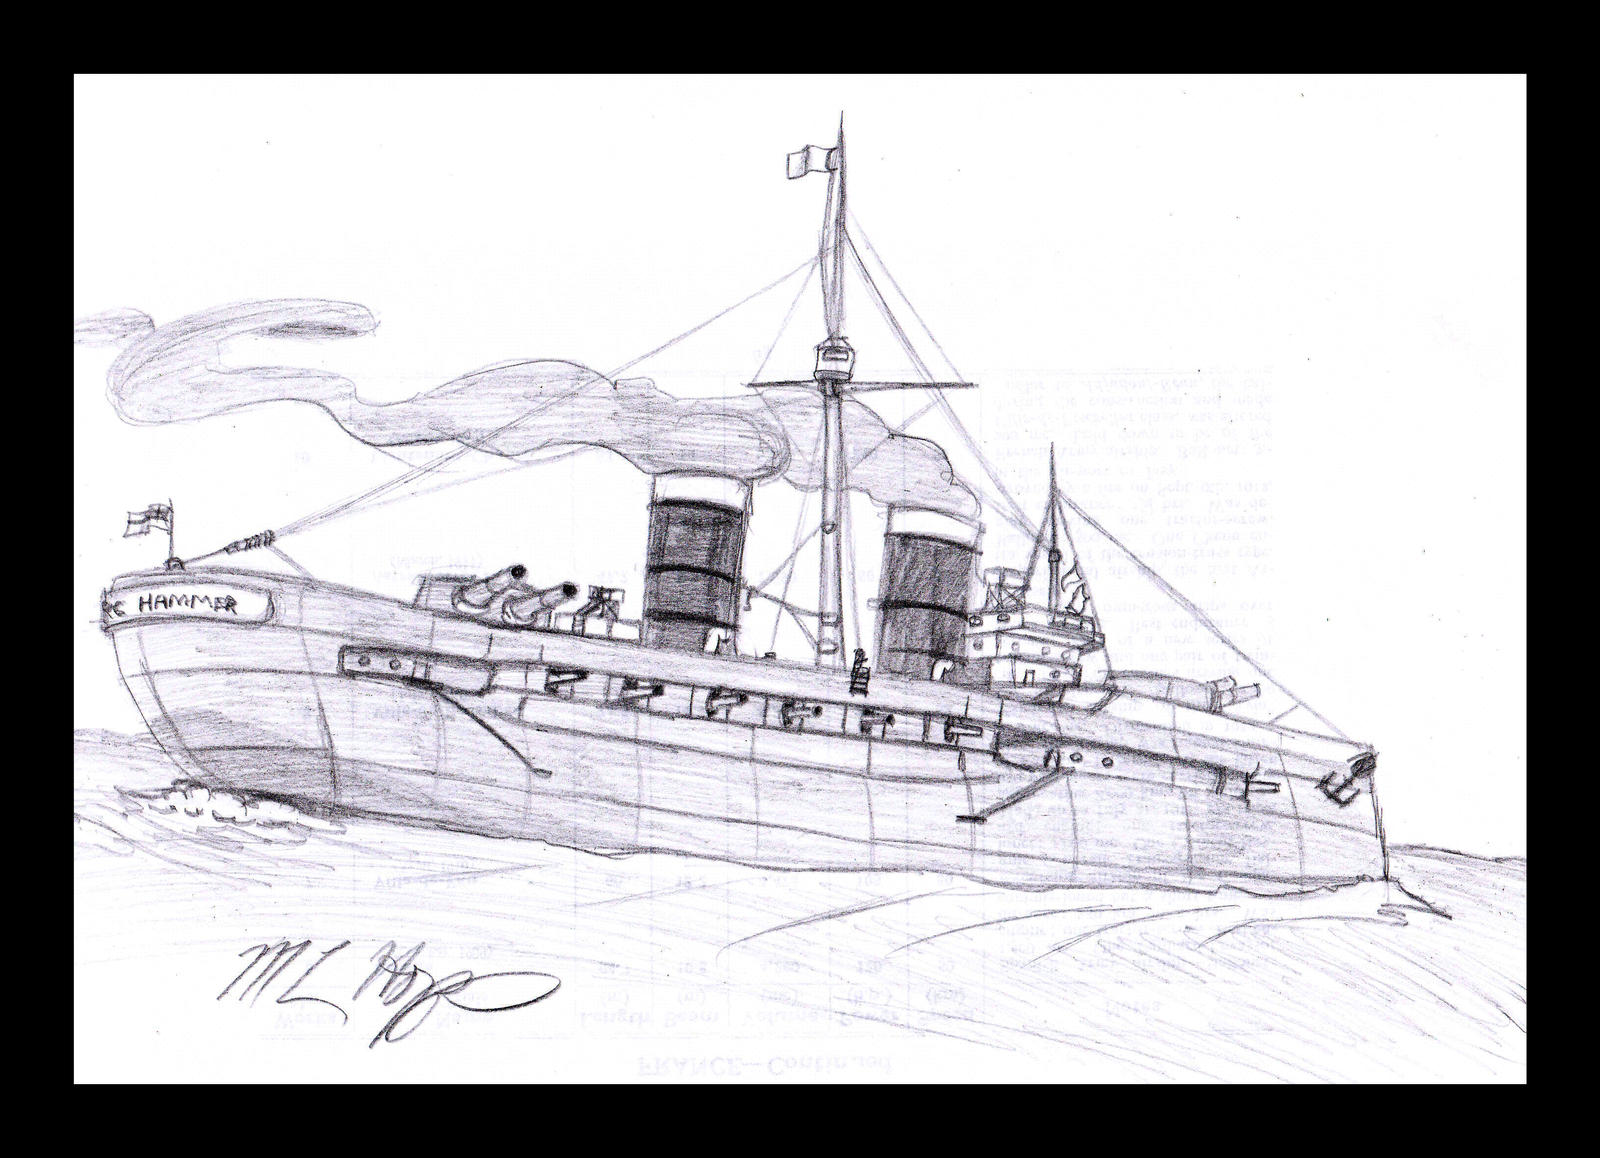 HMS Arc Hammer